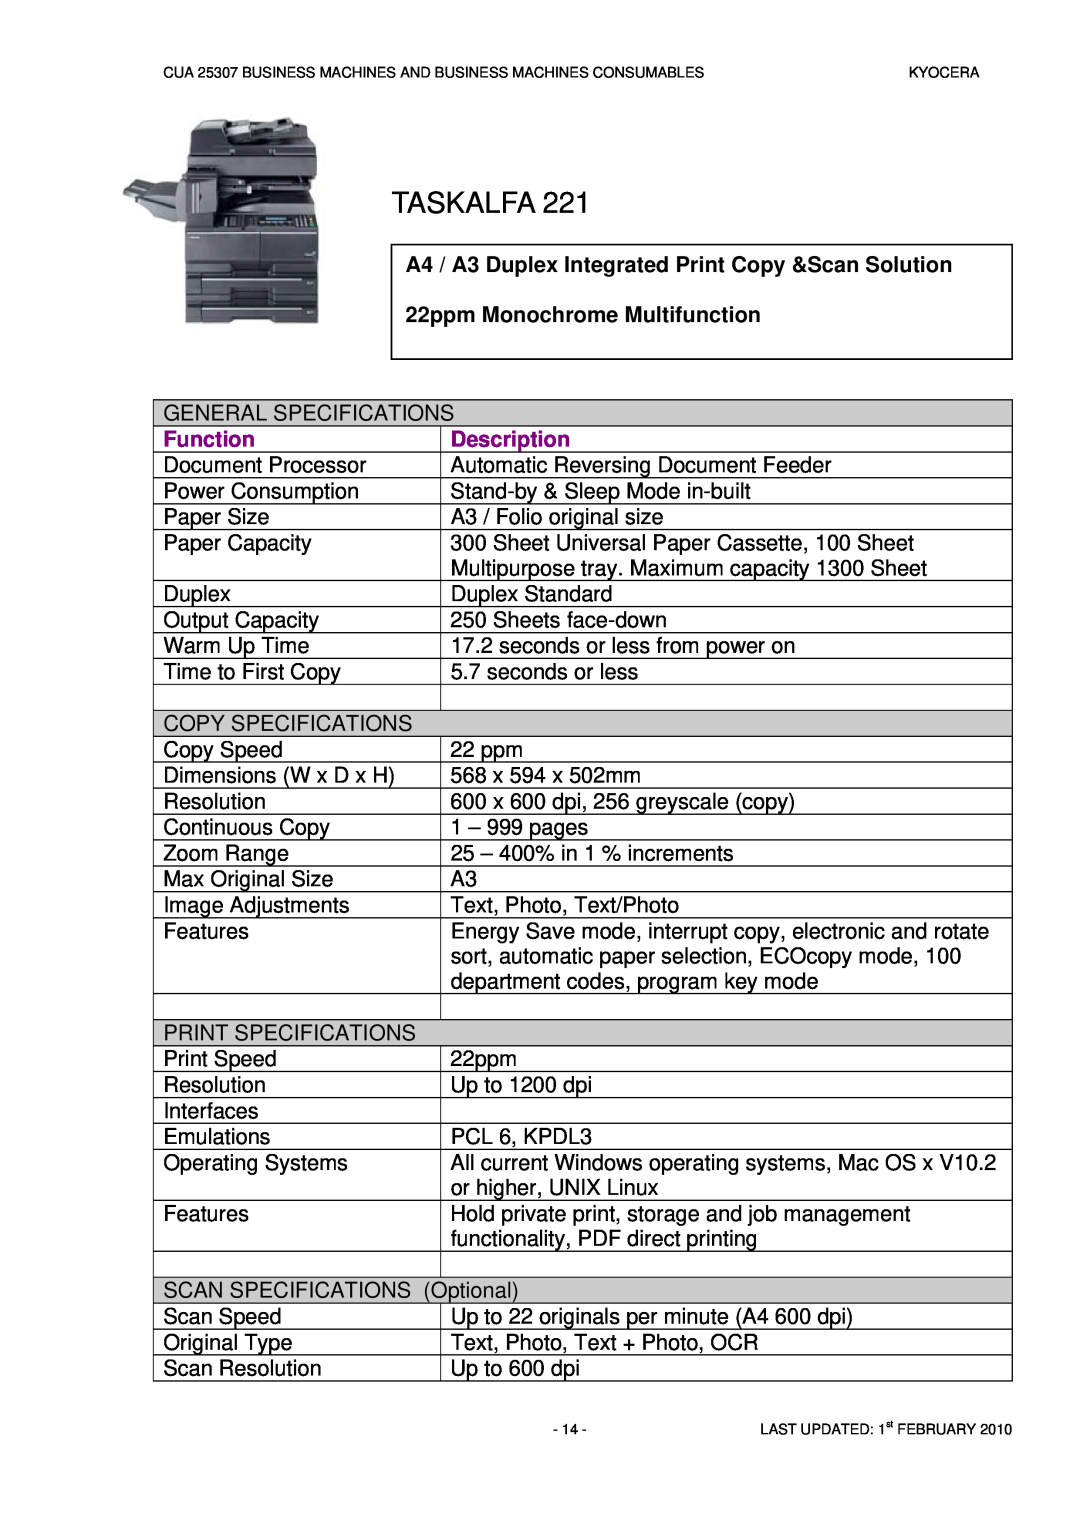 Kyocera CUA 25307 manual 22ppm Monochrome Multifunction, Taskalfa, Function, Description 